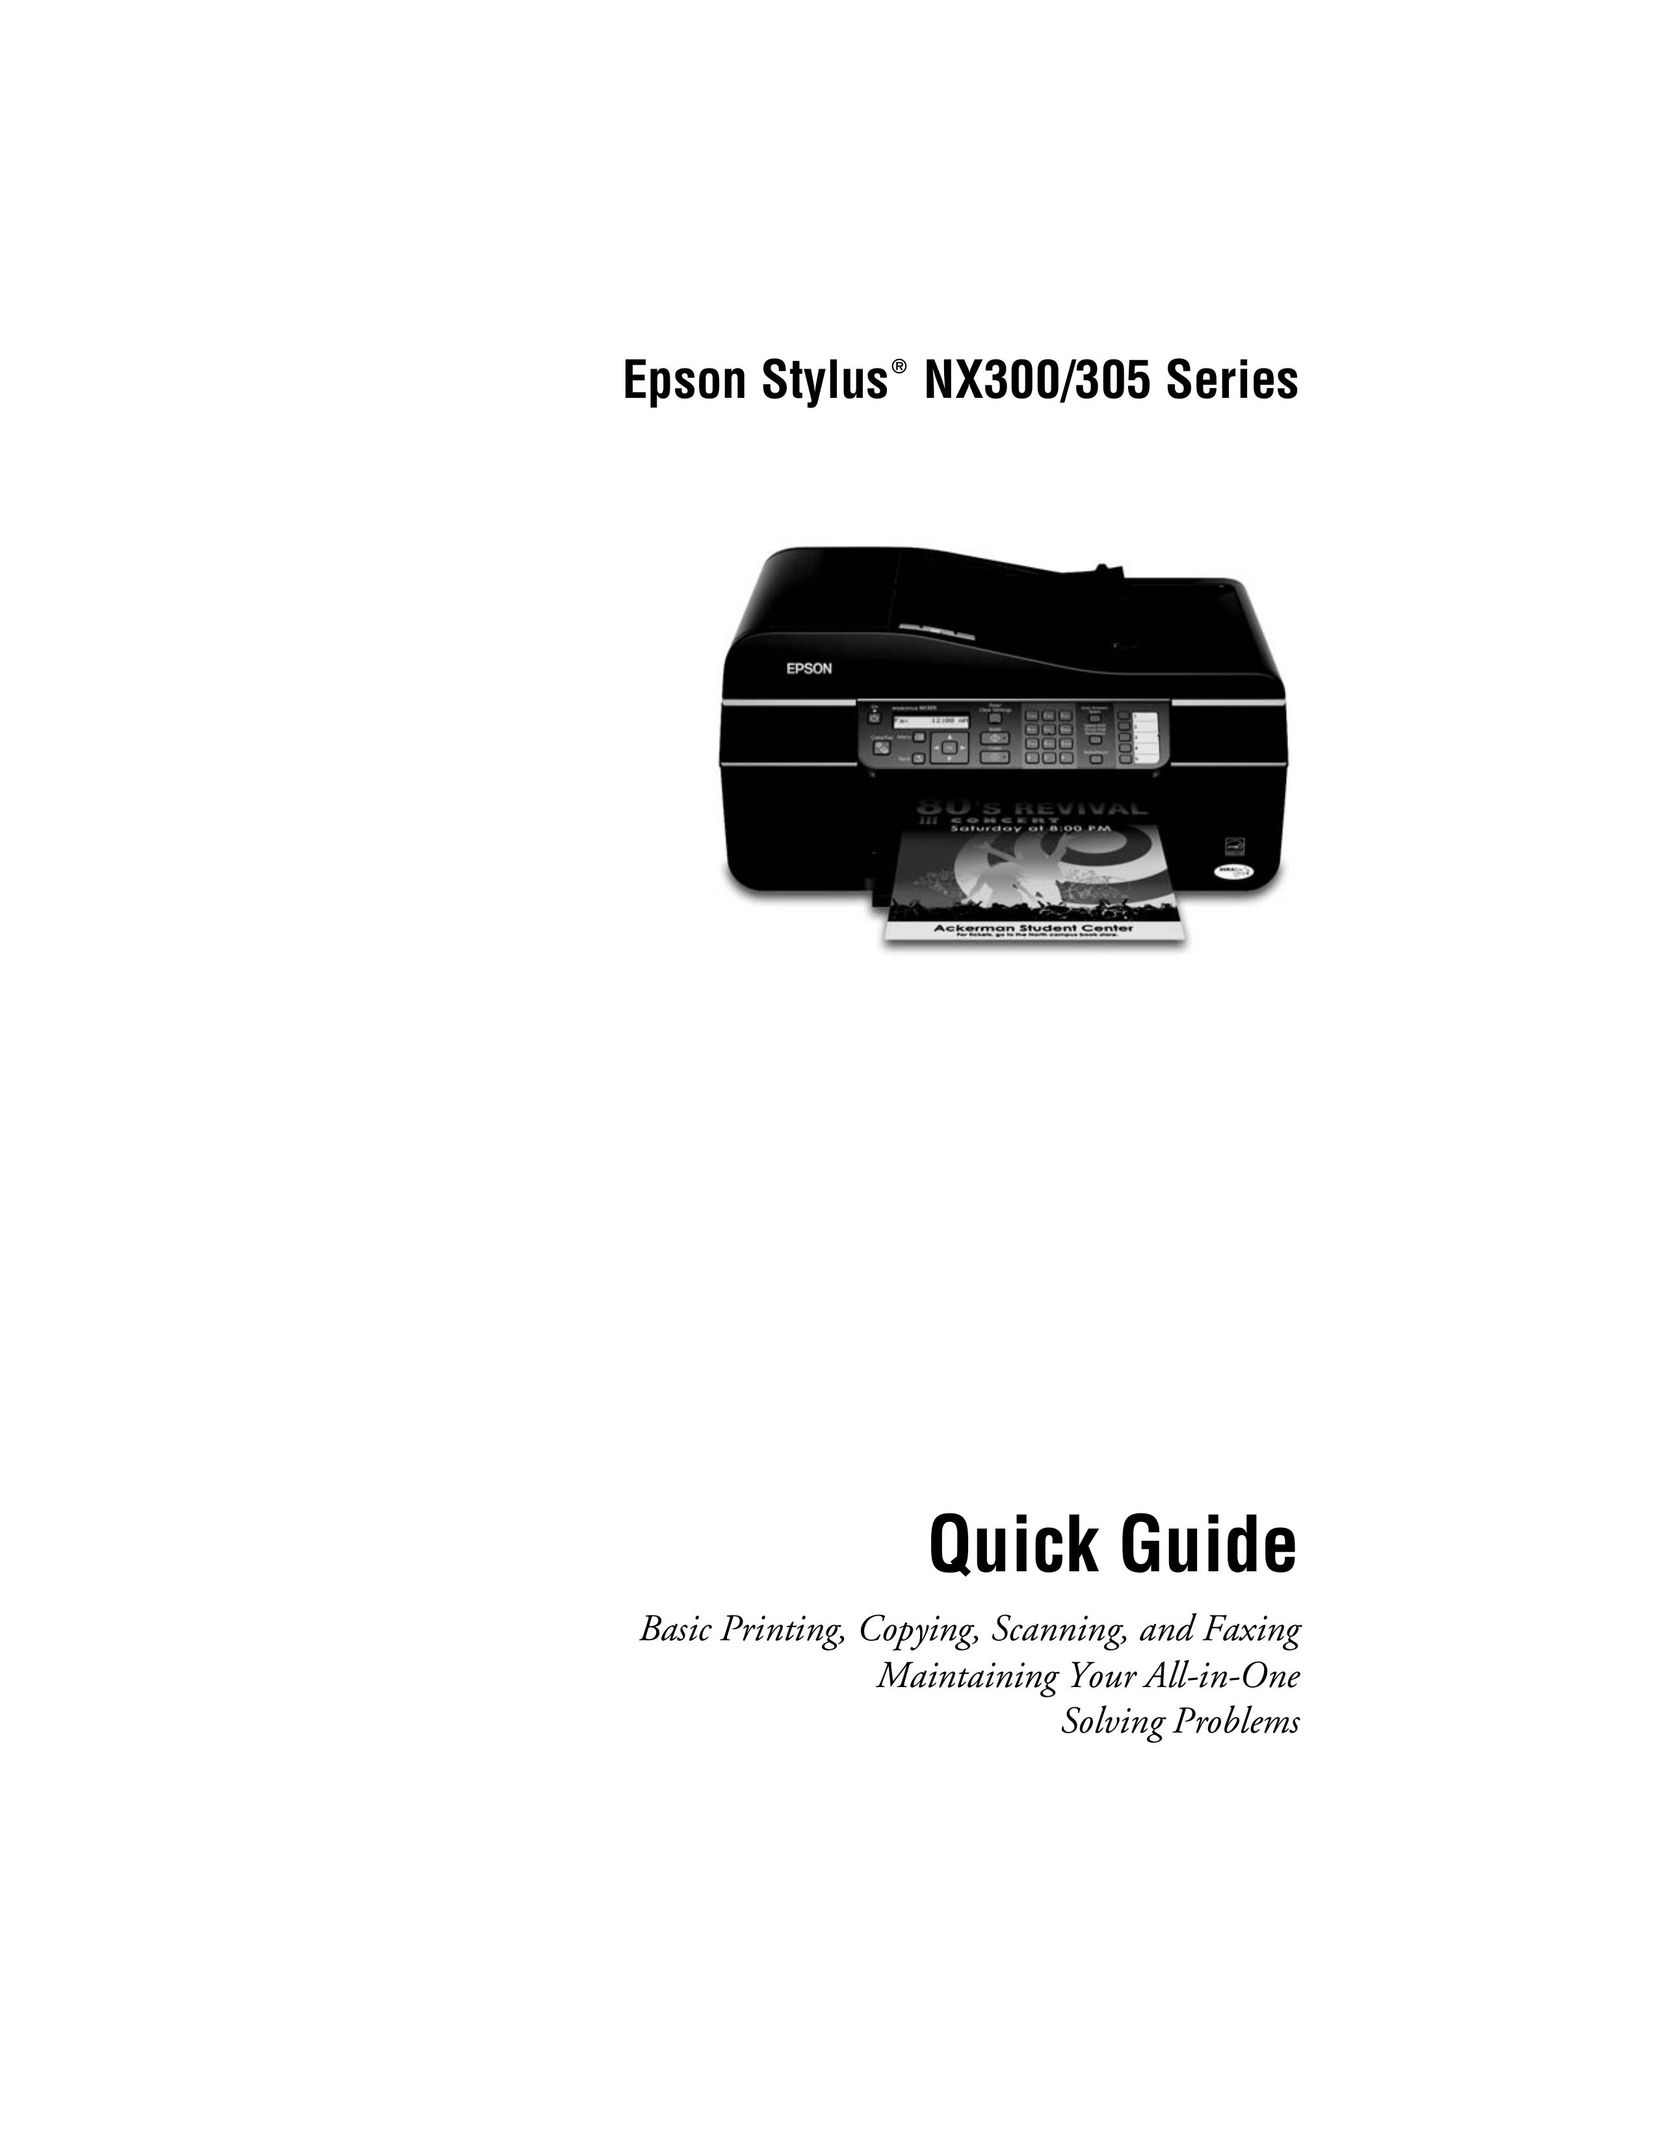 Garmin NX300 All in One Printer User Manual